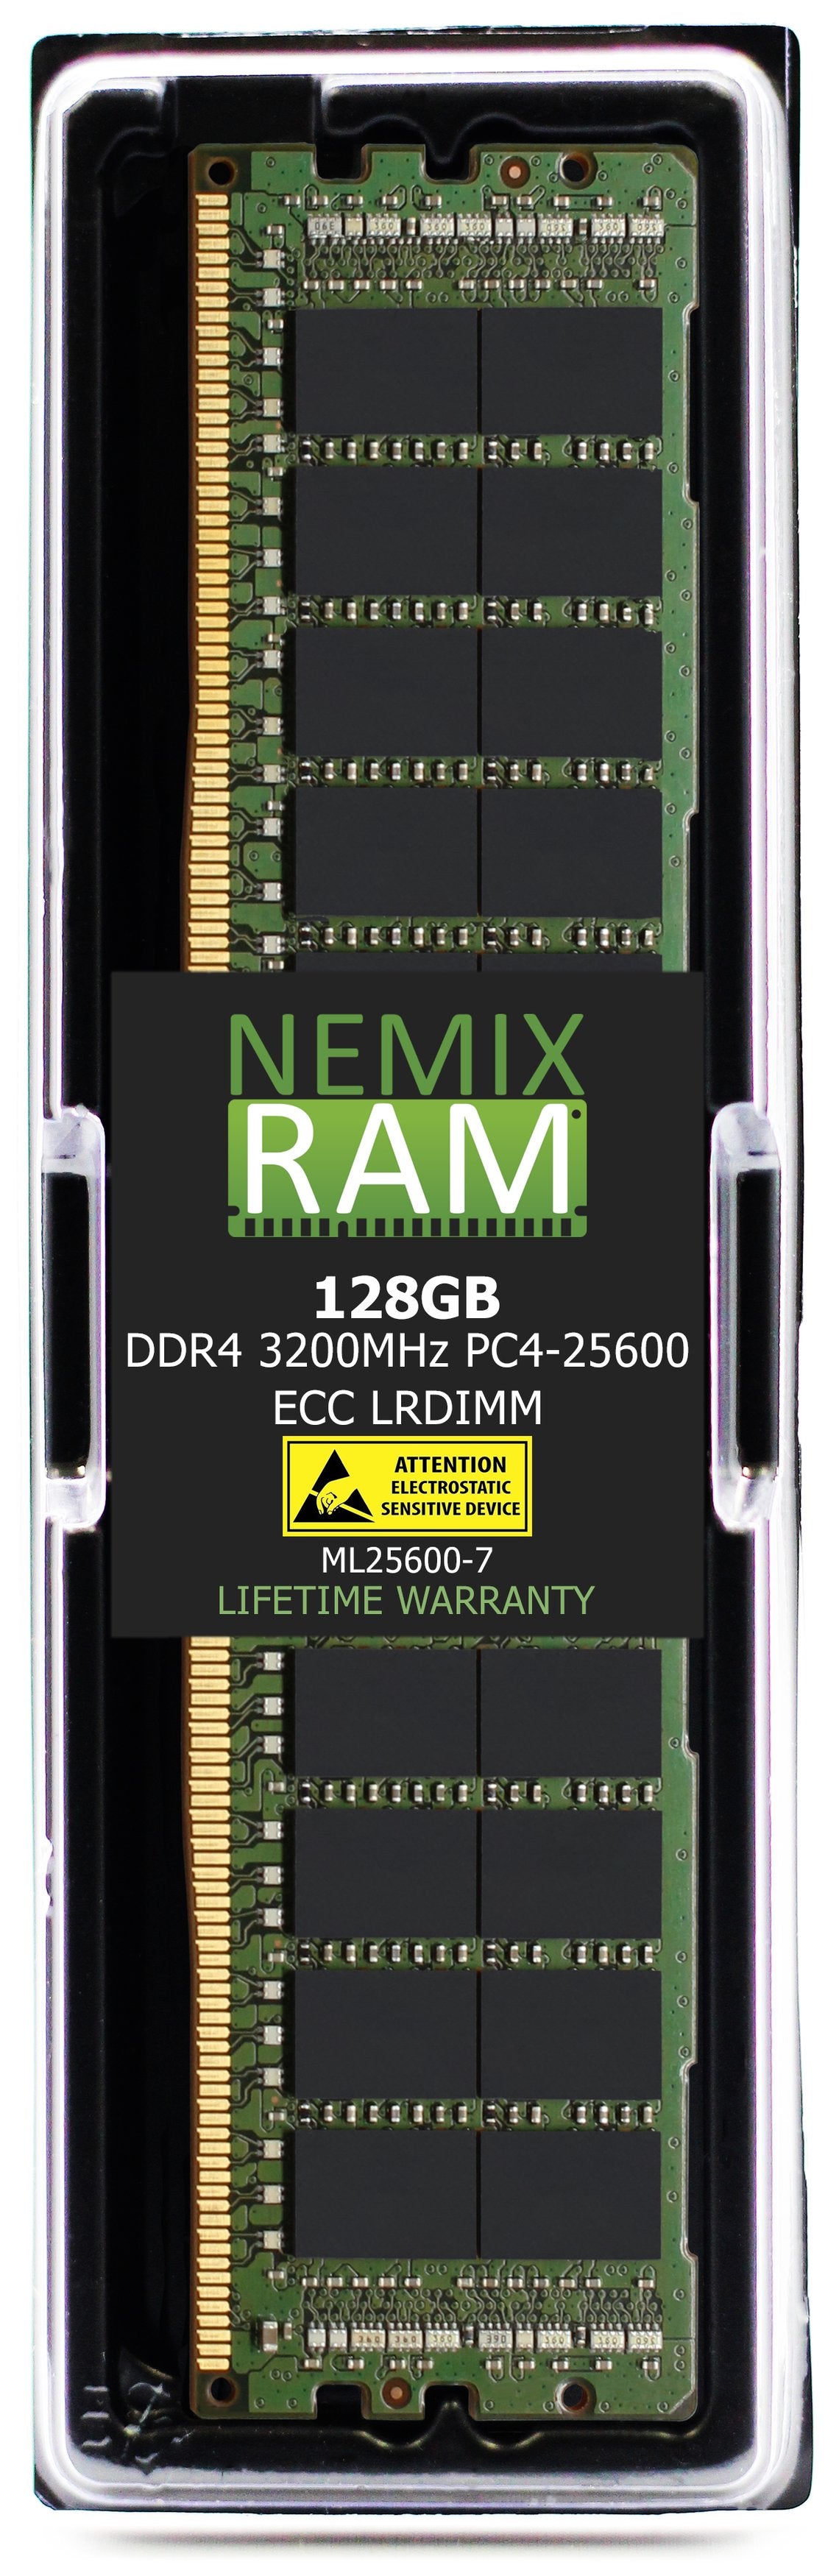 128GB DDR4 3200MHZ PC4-25600 LRDIMM Compatible with Supermicro MEM-DR412MG-LR32